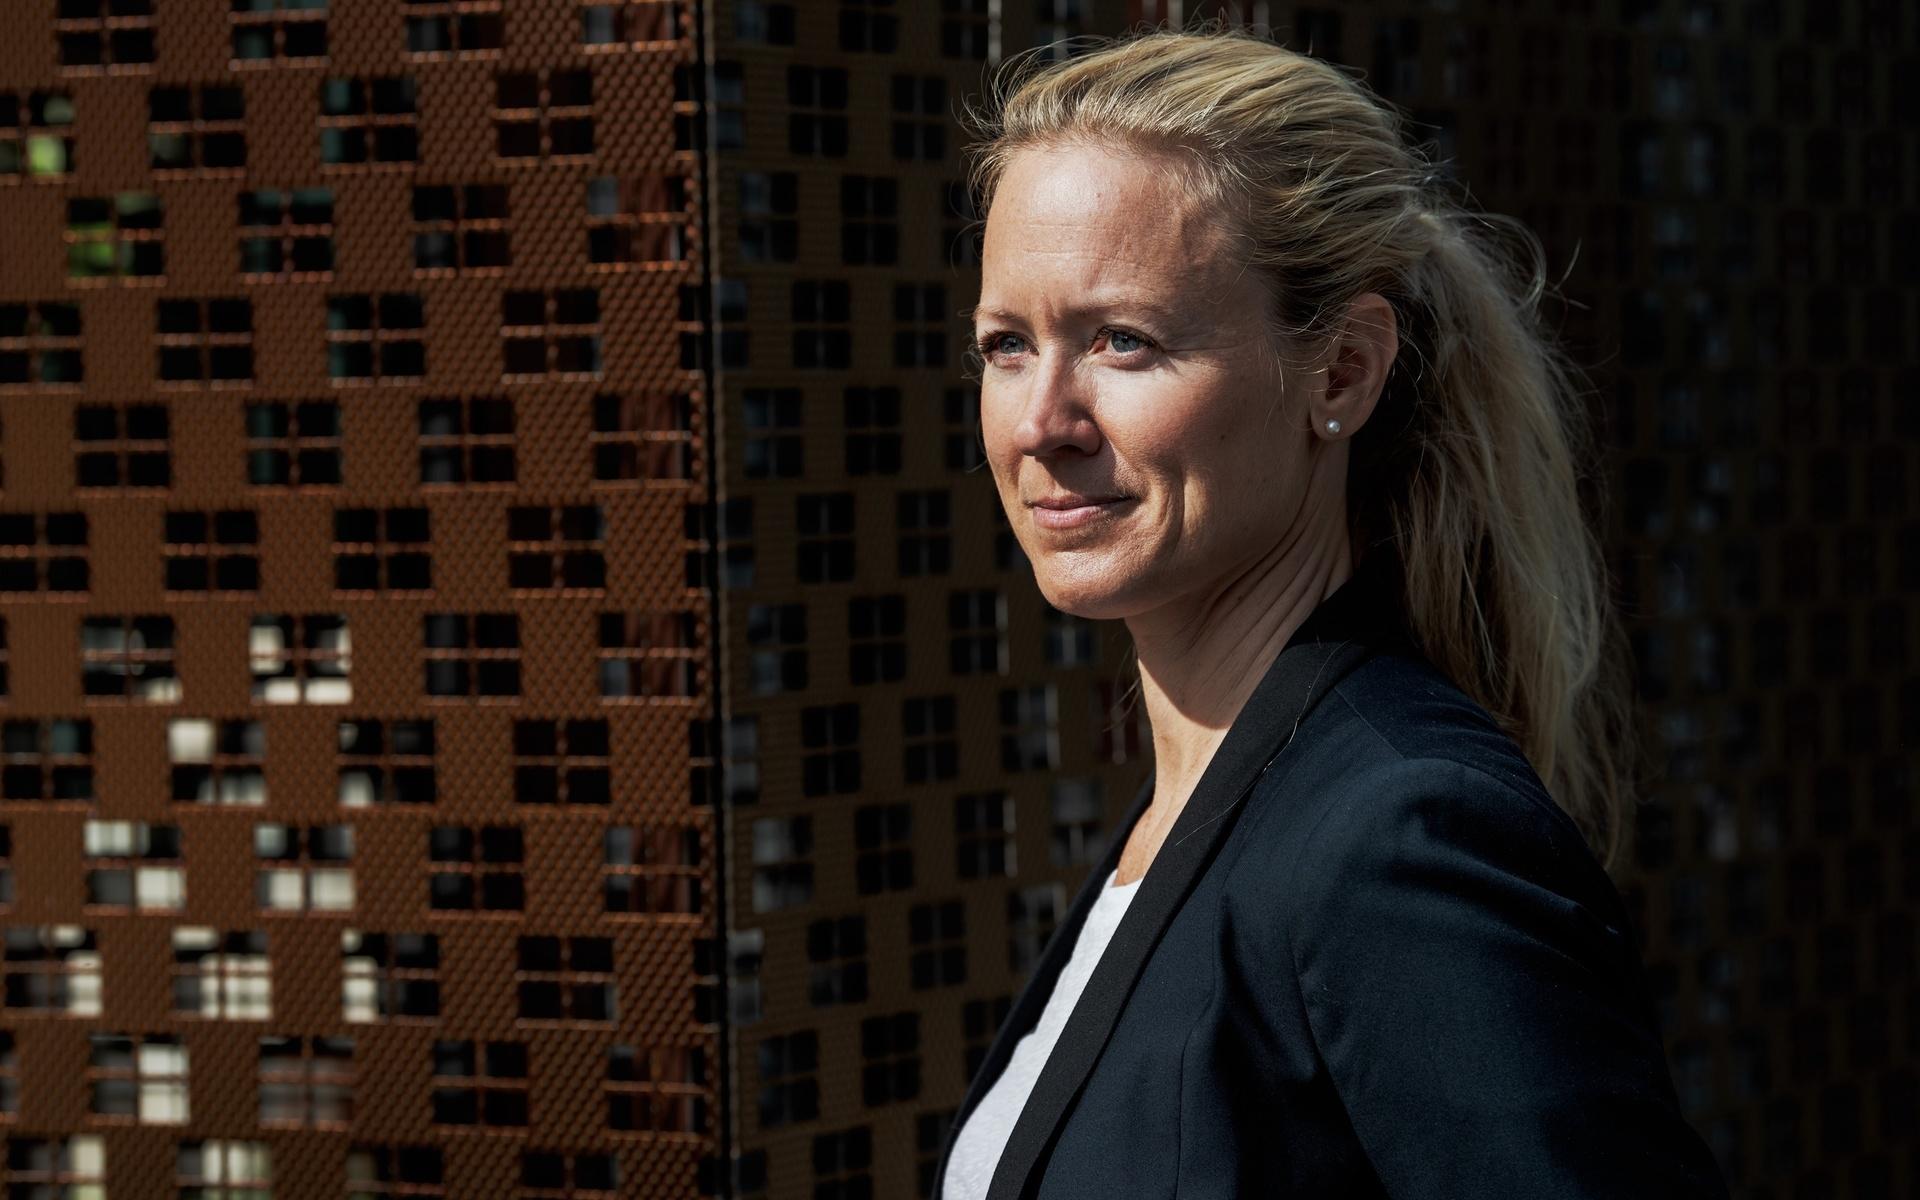 Kristine Rygge, vaccinationssamordnare i Västra Götaland.